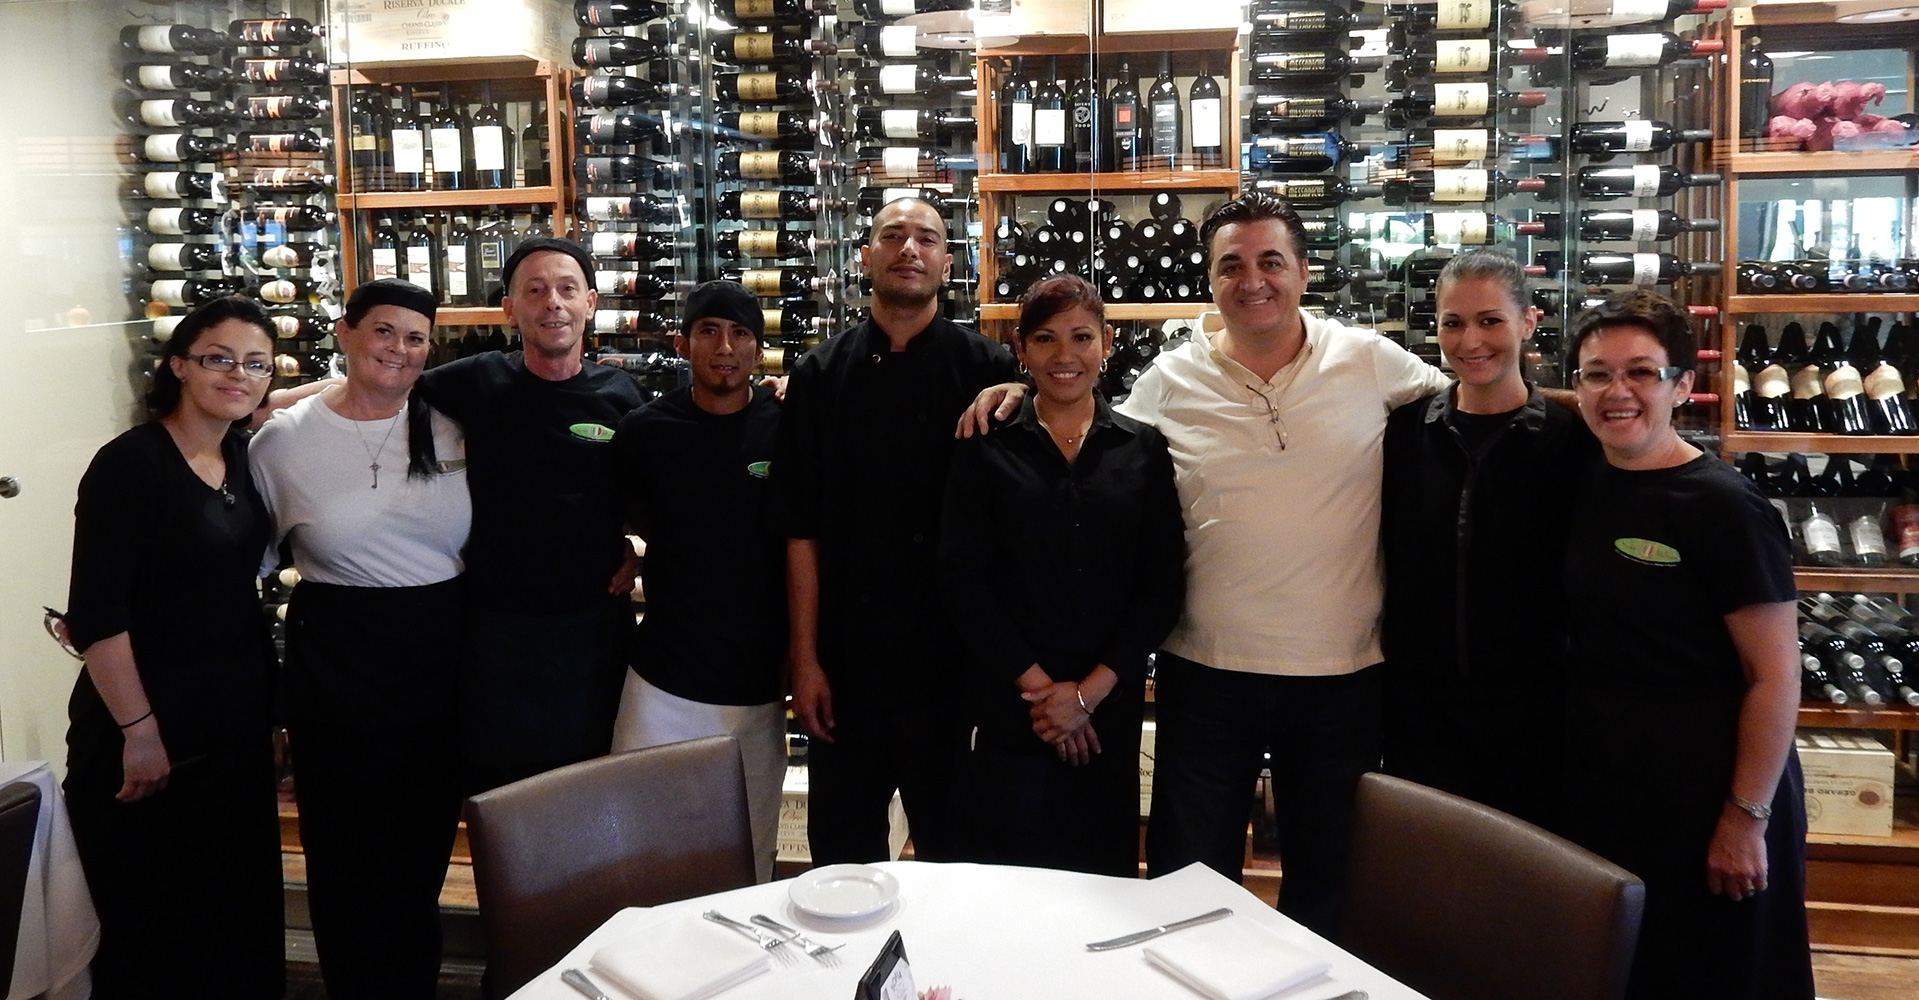 Chef Giancarlo in White & Staff, Siena Italian Restaurant, Westside Las Vegas